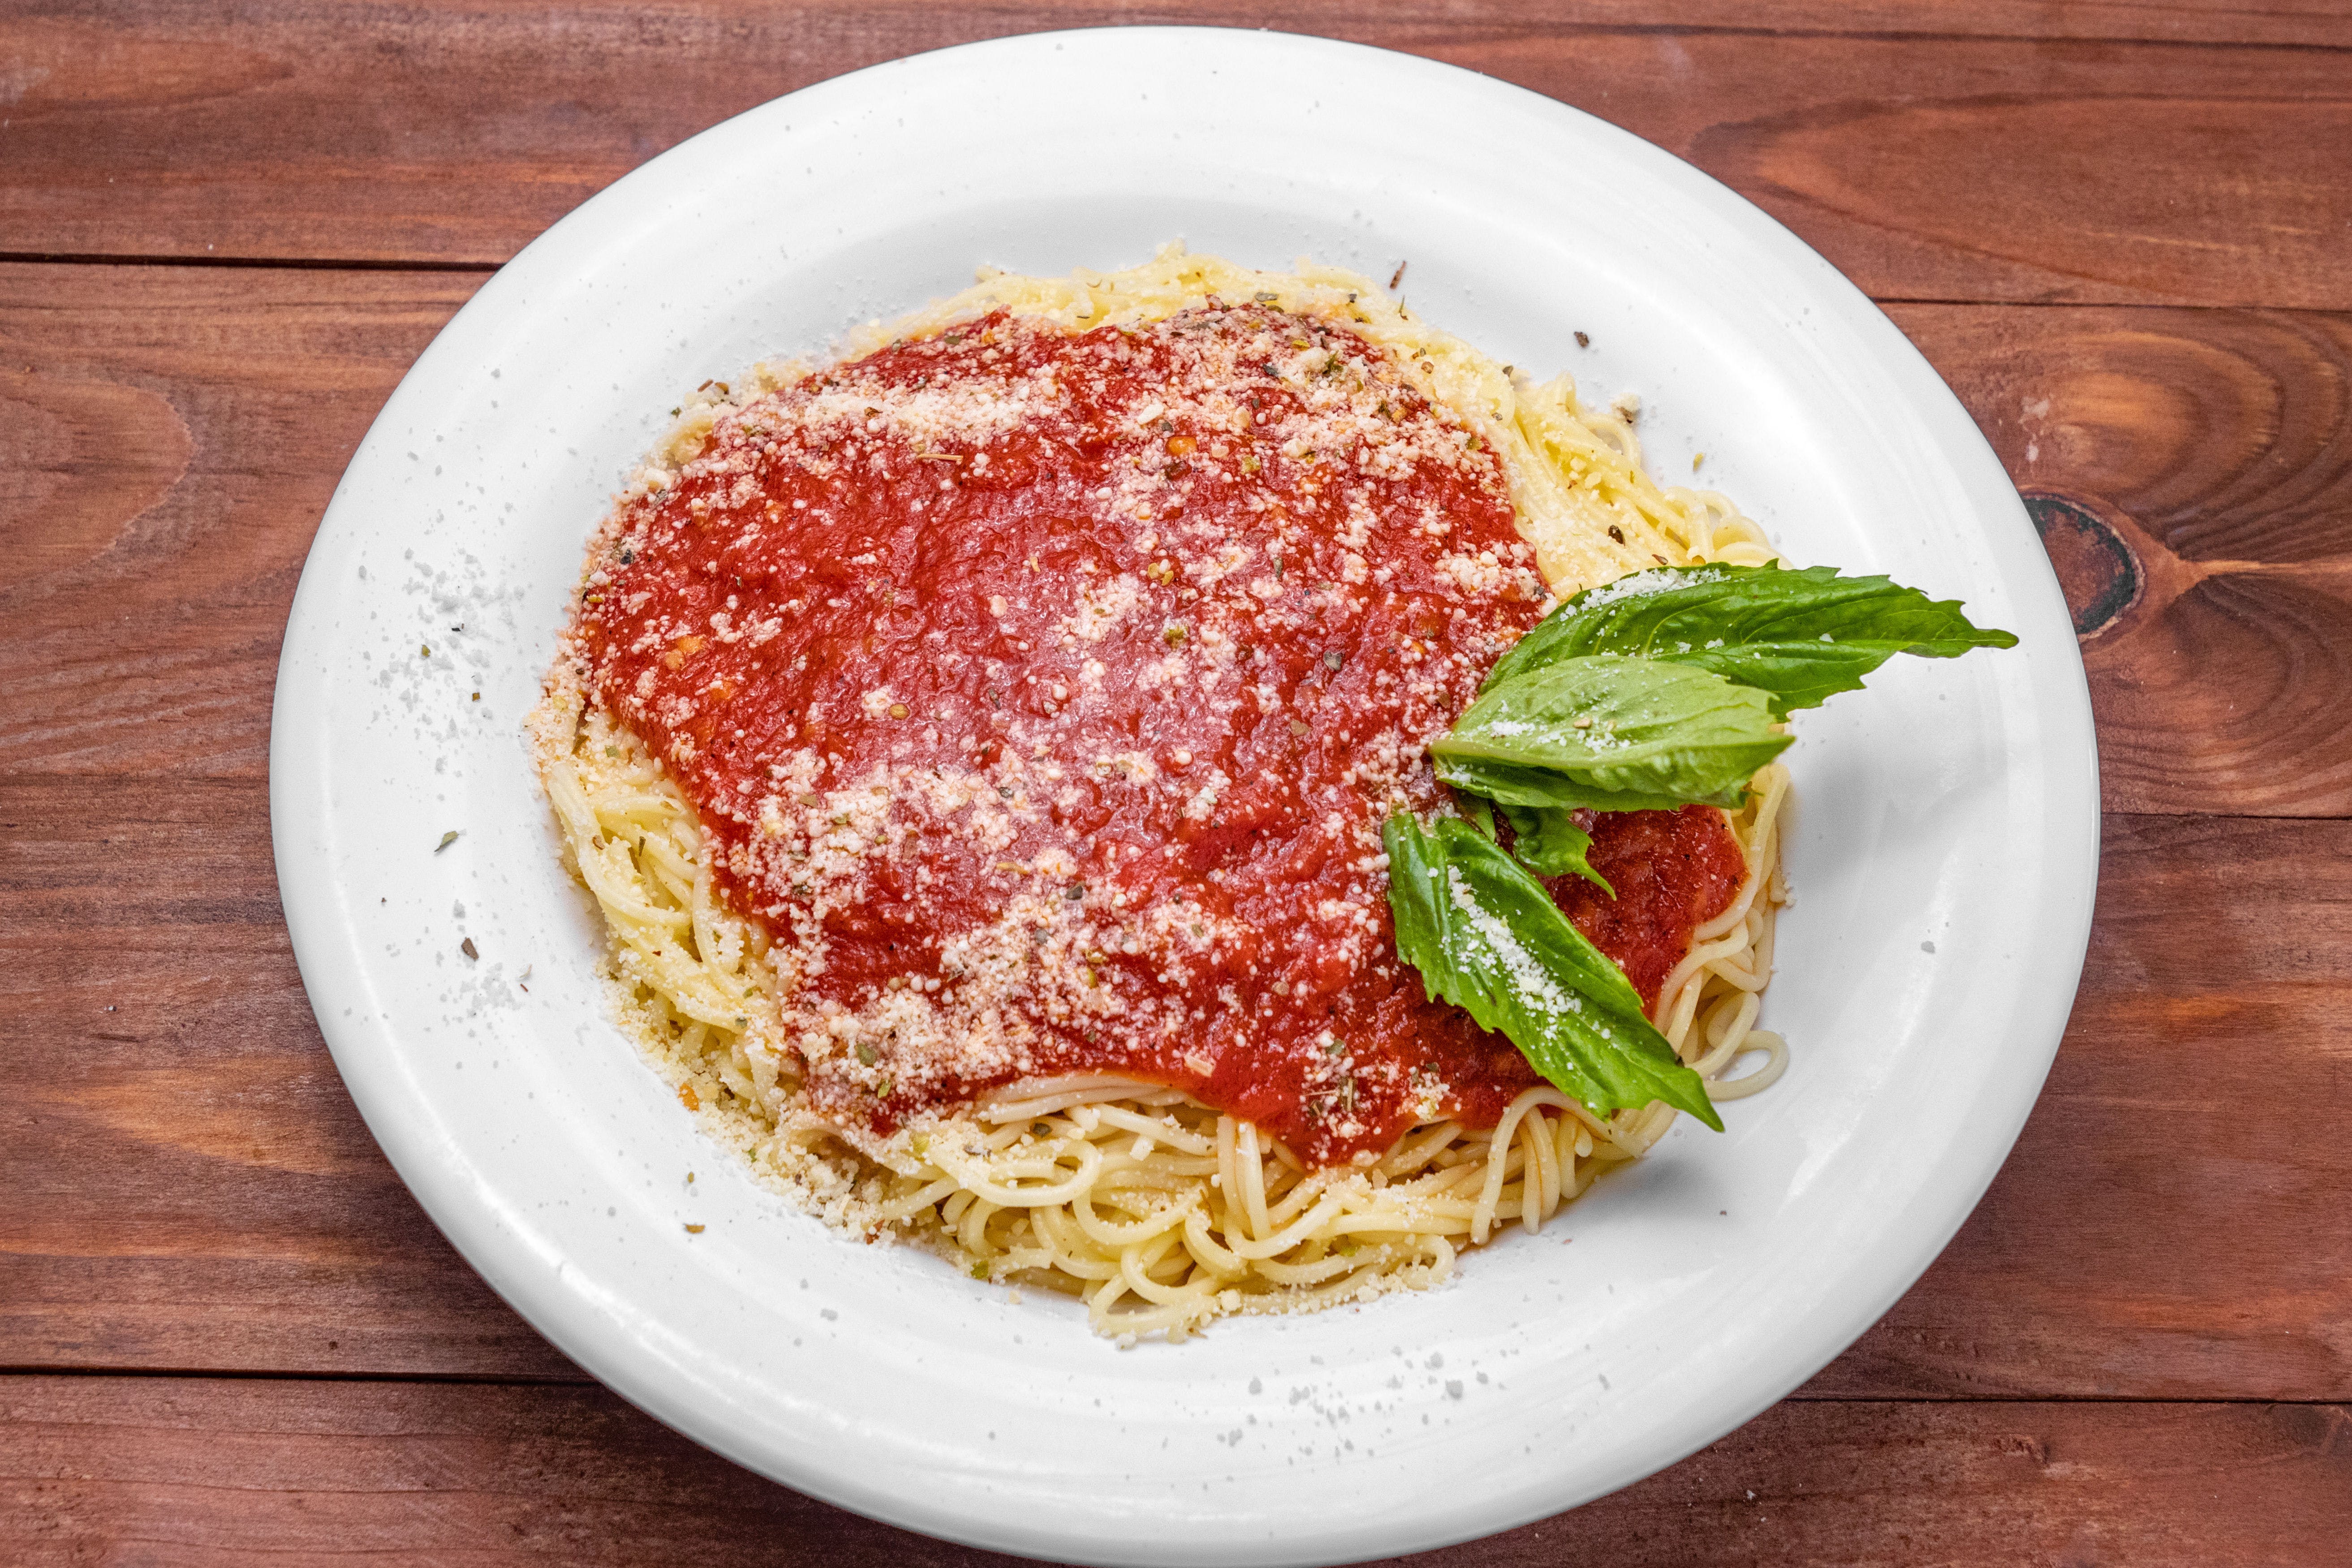 Napoli New York Pizza Italian Kitchen & Catering hero